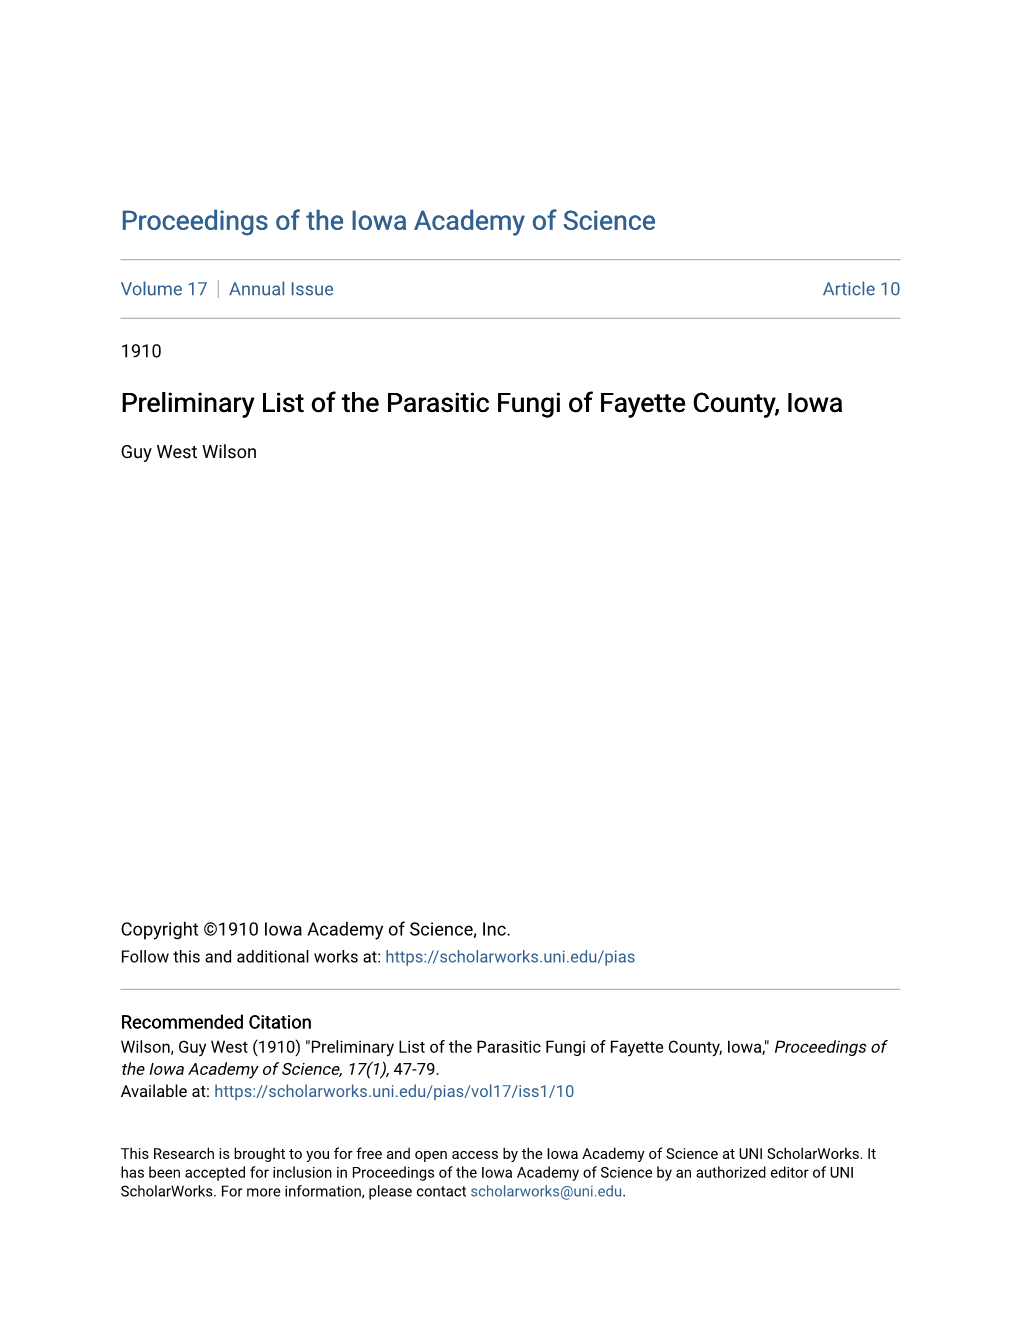 Preliminary List of the Parasitic Fungi of Fayette County, Iowa